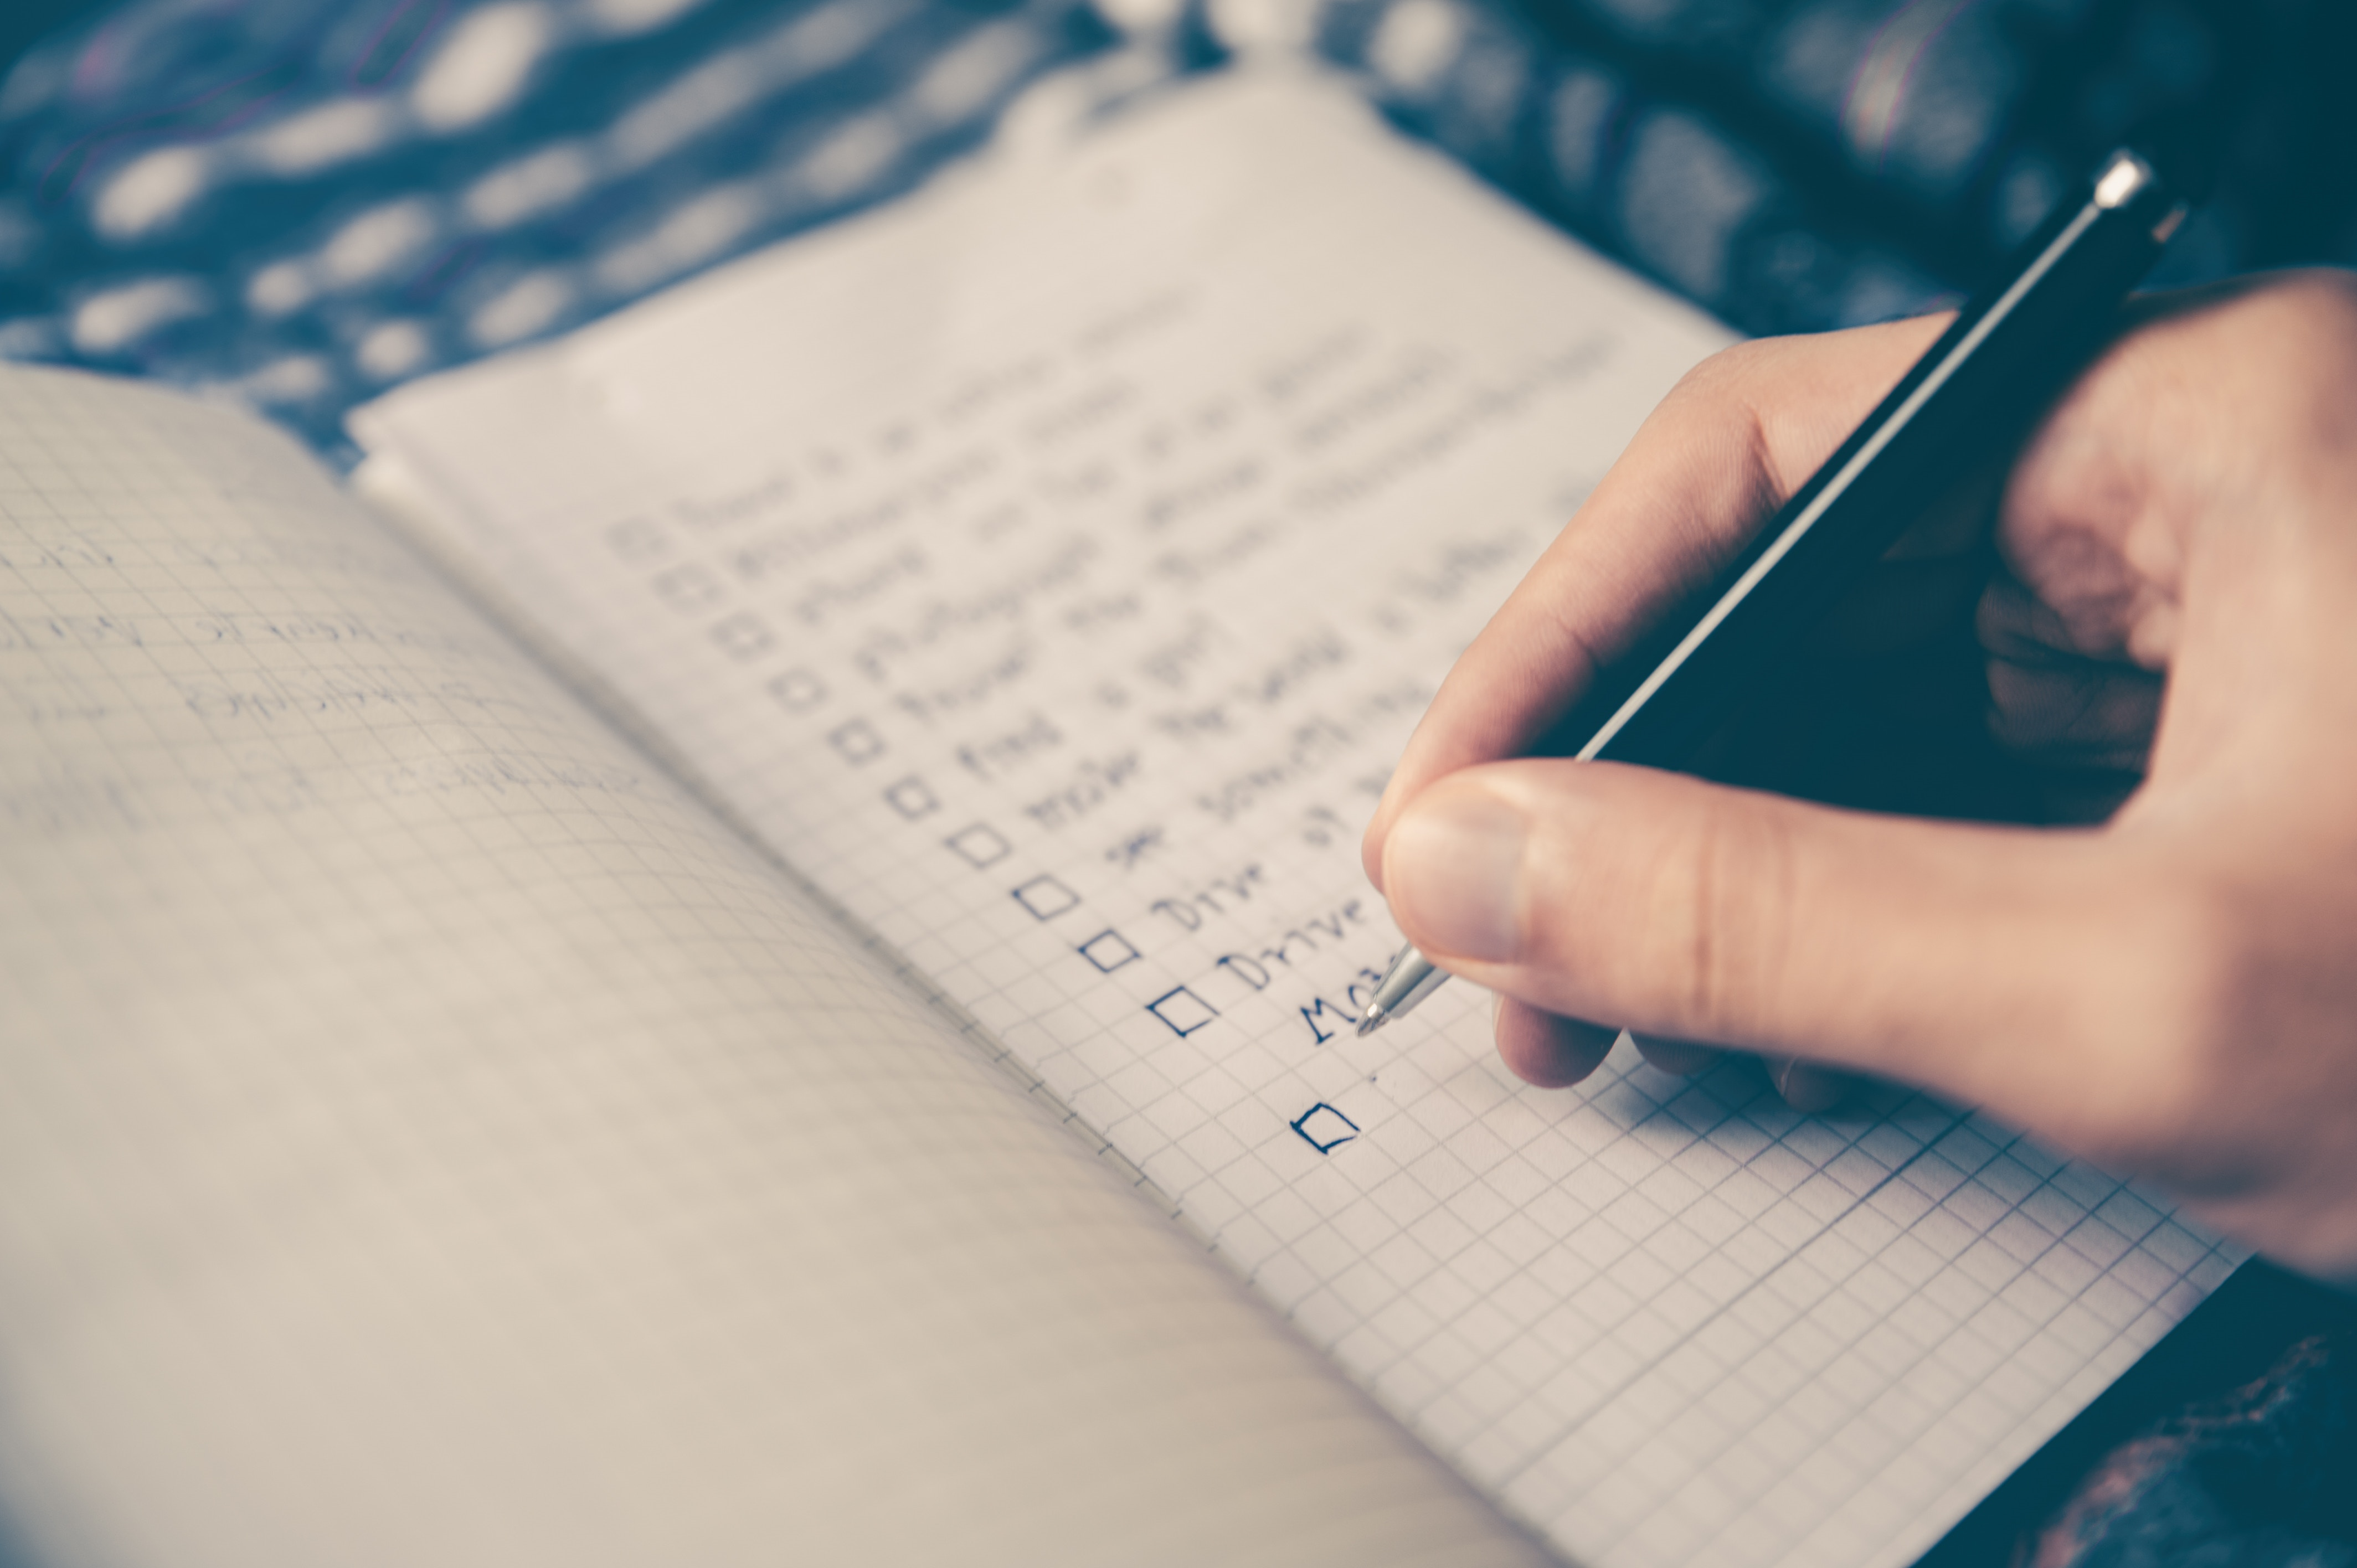 A checklist in a notebook